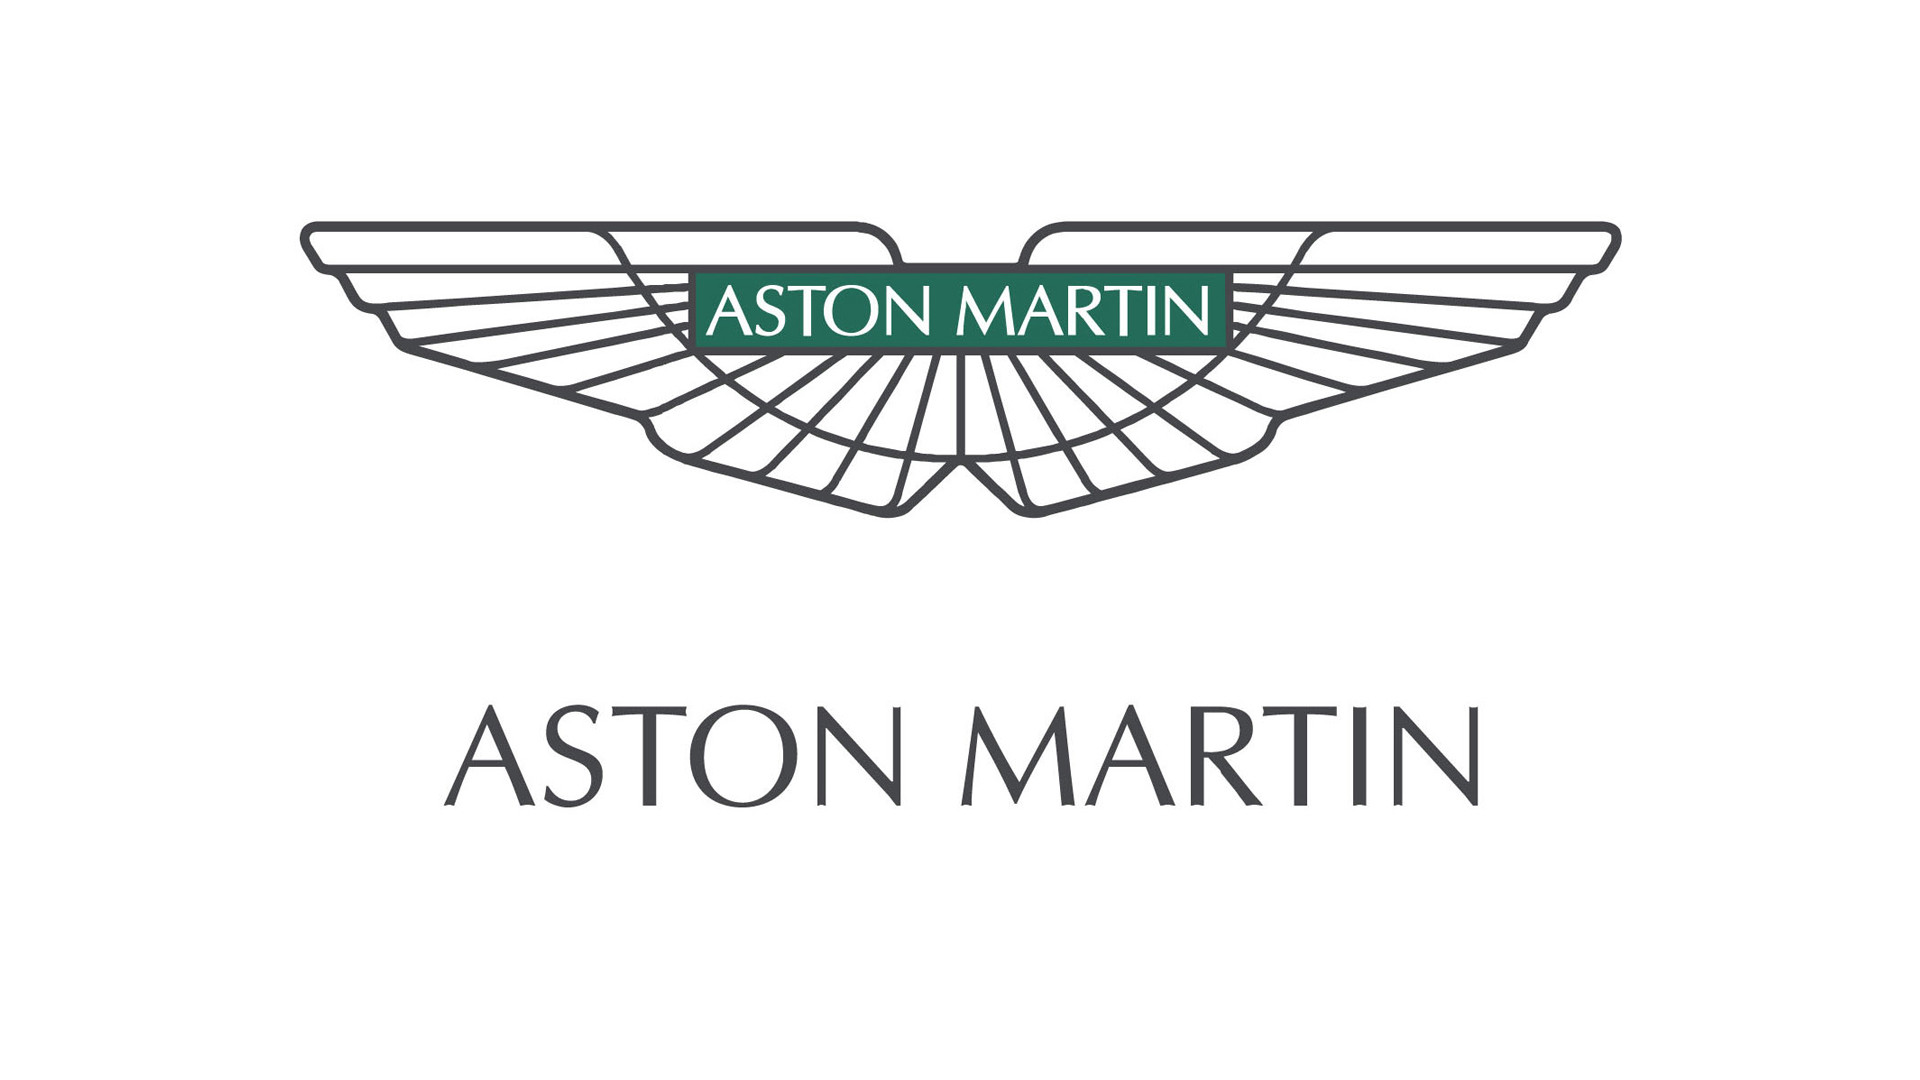 1920x1080 Aston Martin logo wallpaper